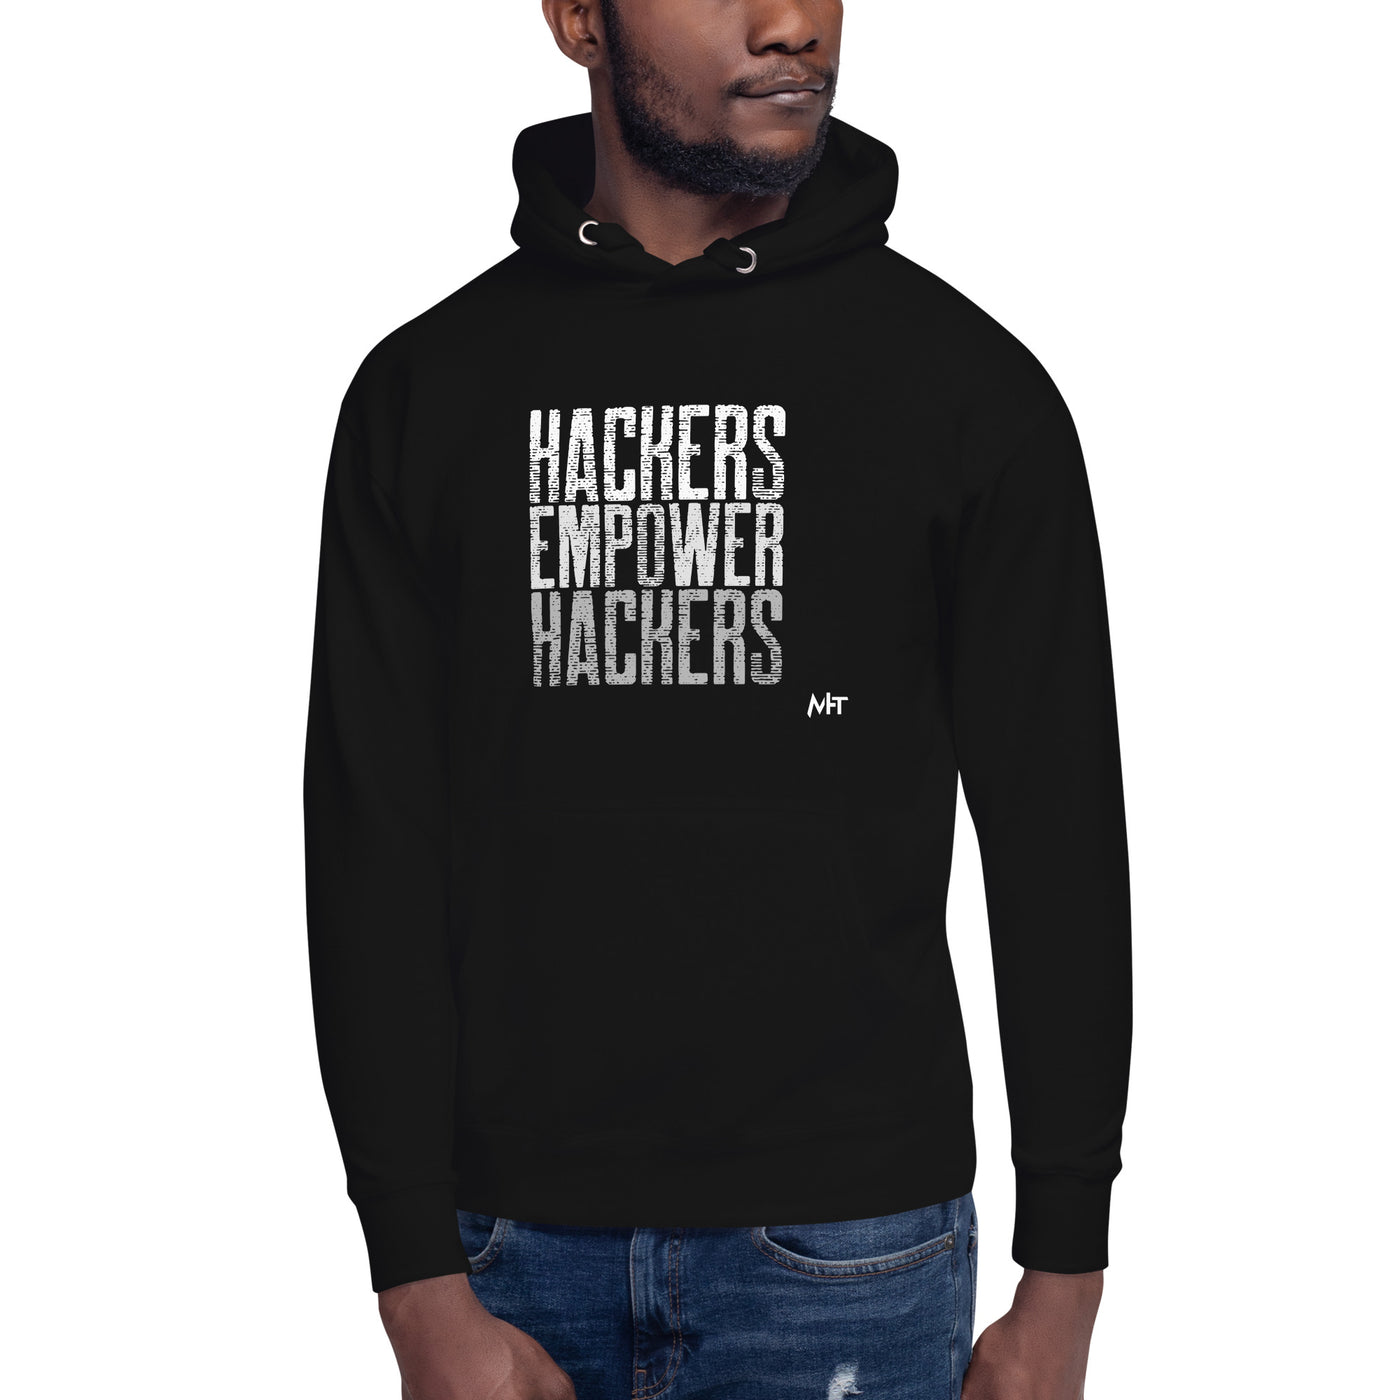 Hackers Empower Hackers V1 - Unisex Hoodie